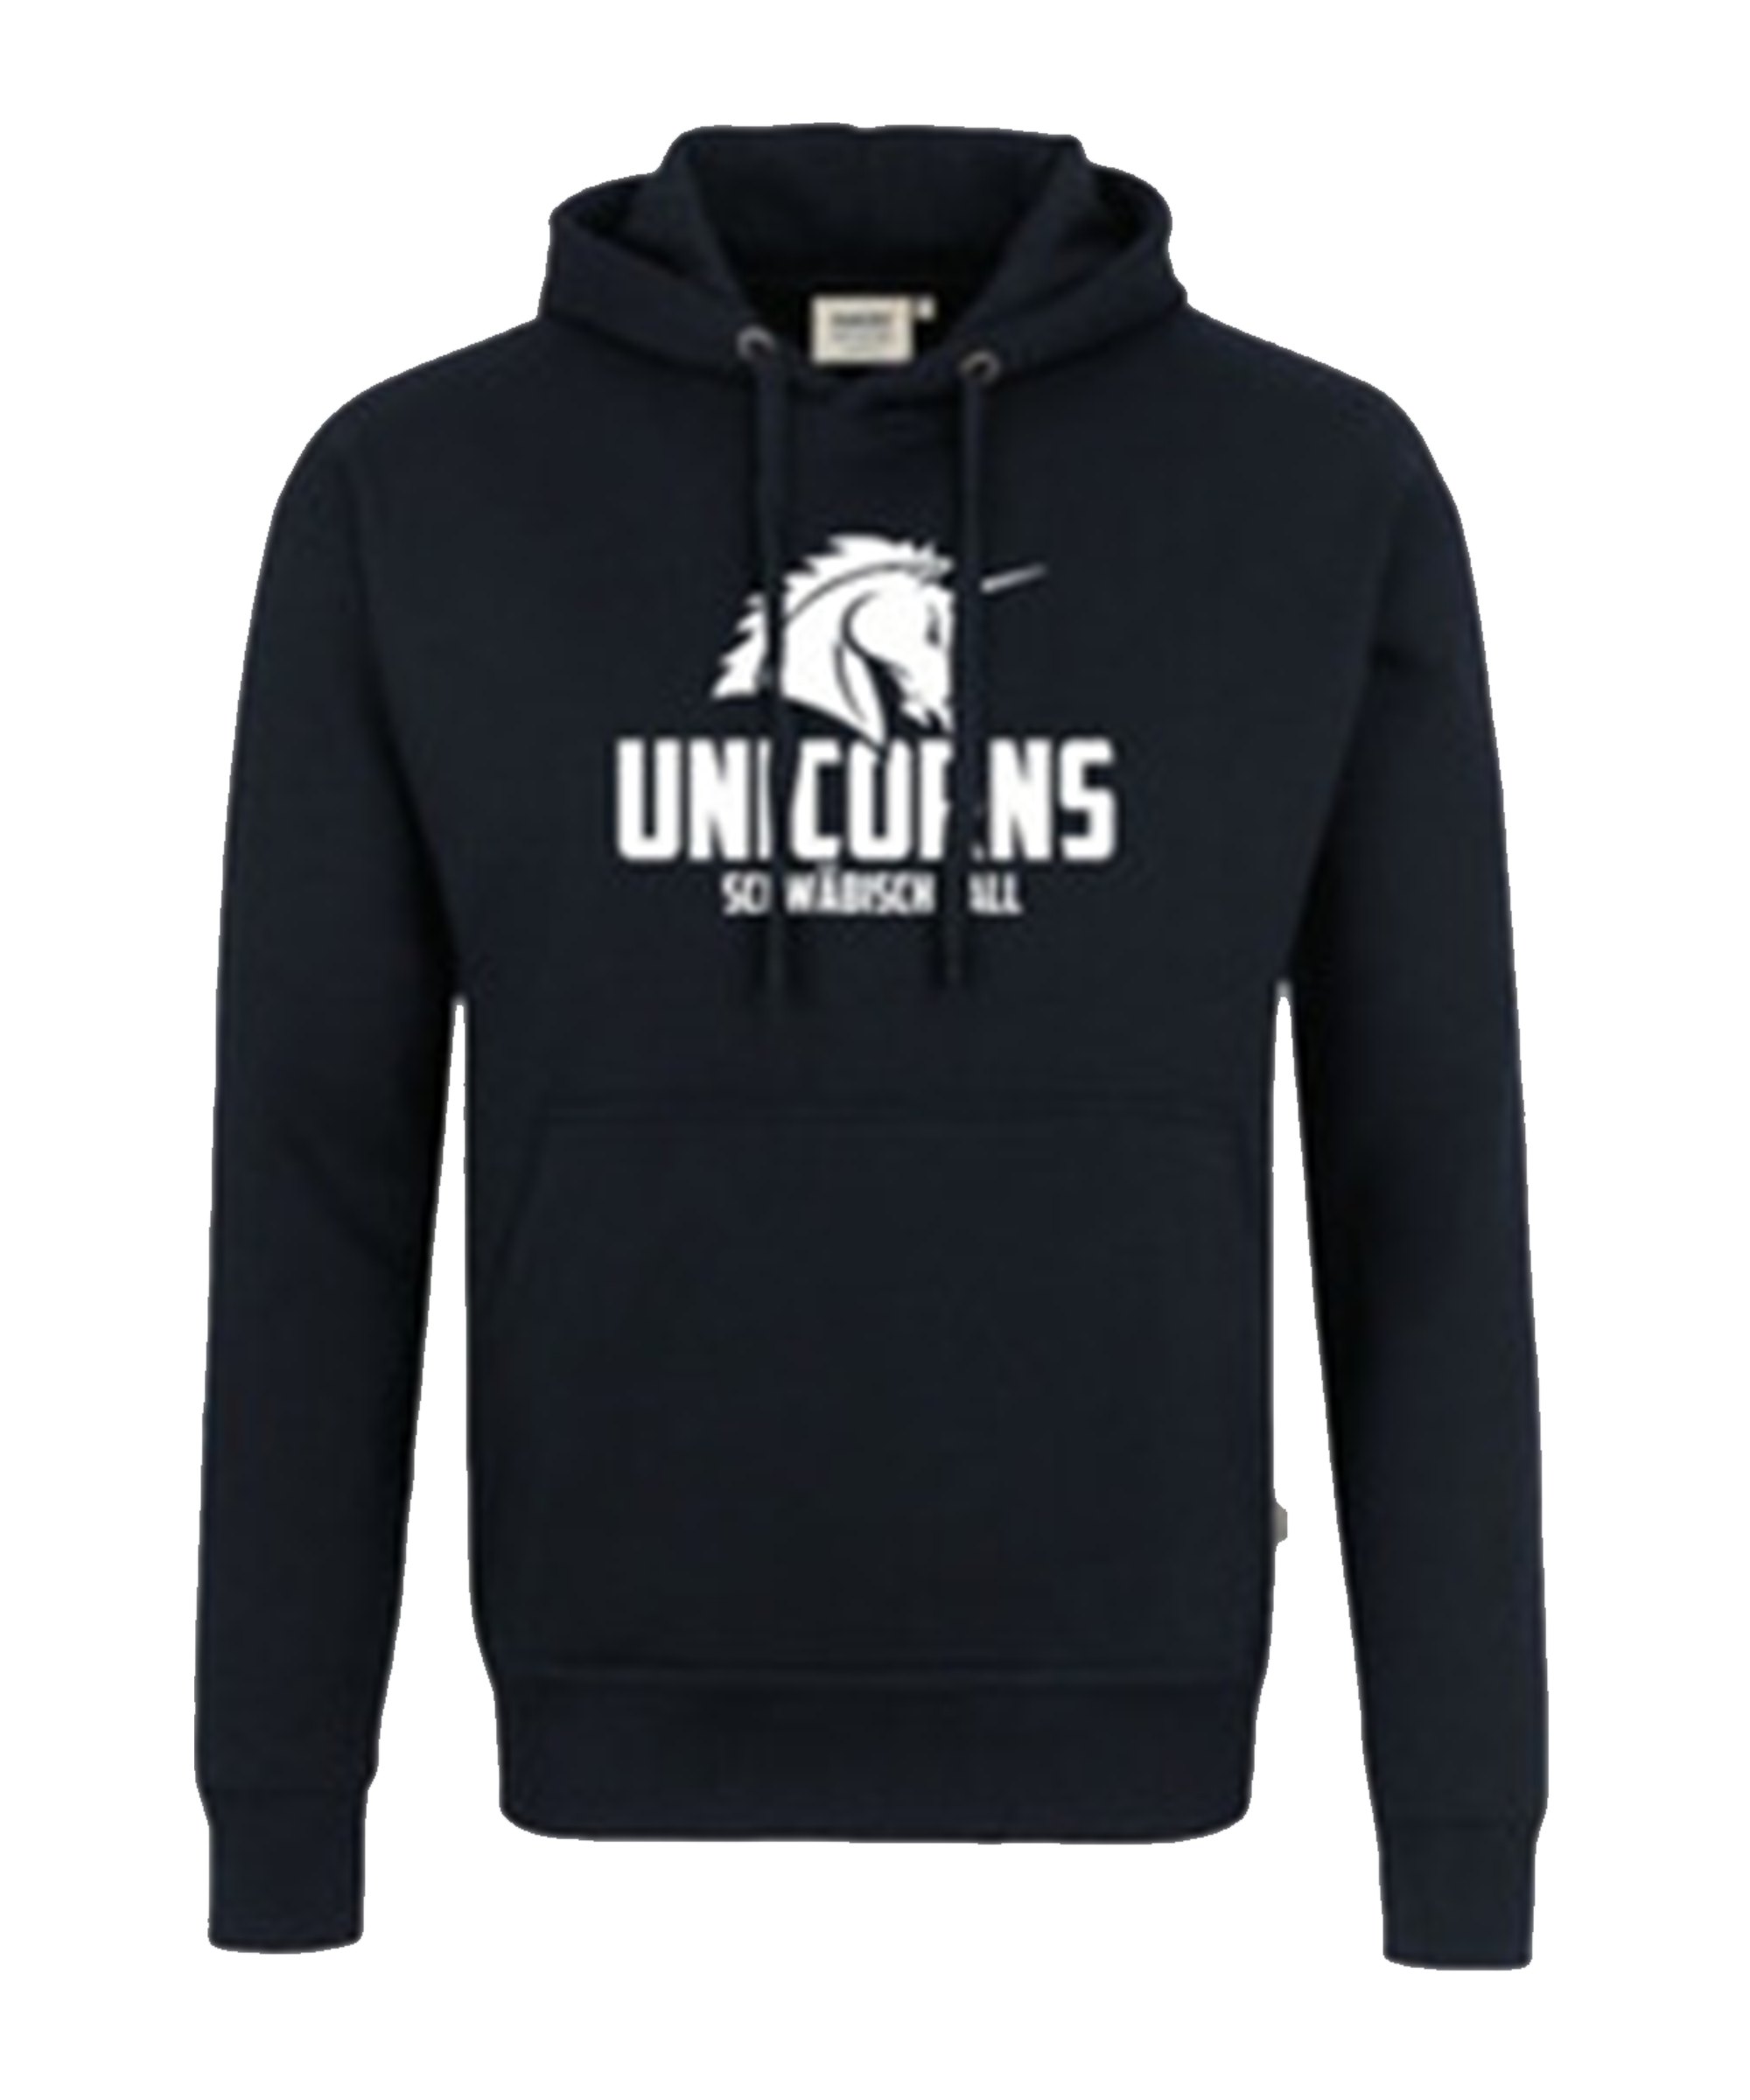 Unicorns Hoody Sweatshirt Premium Schwarz - schwarz